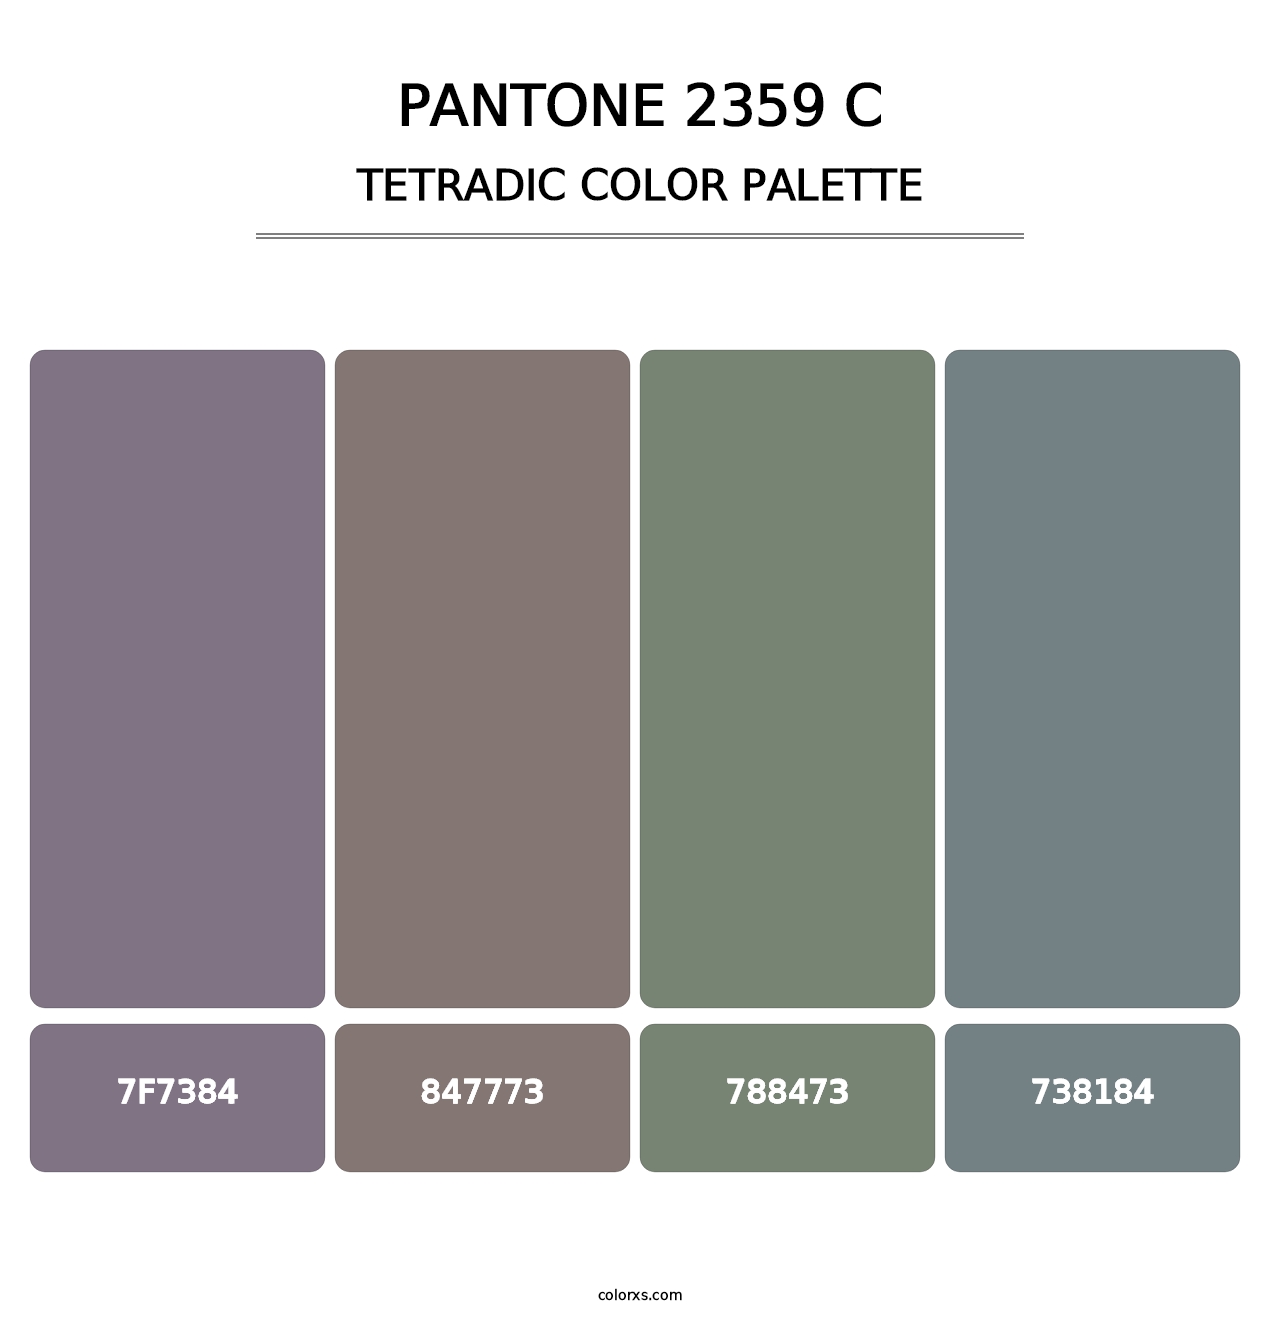 PANTONE 2359 C - Tetradic Color Palette